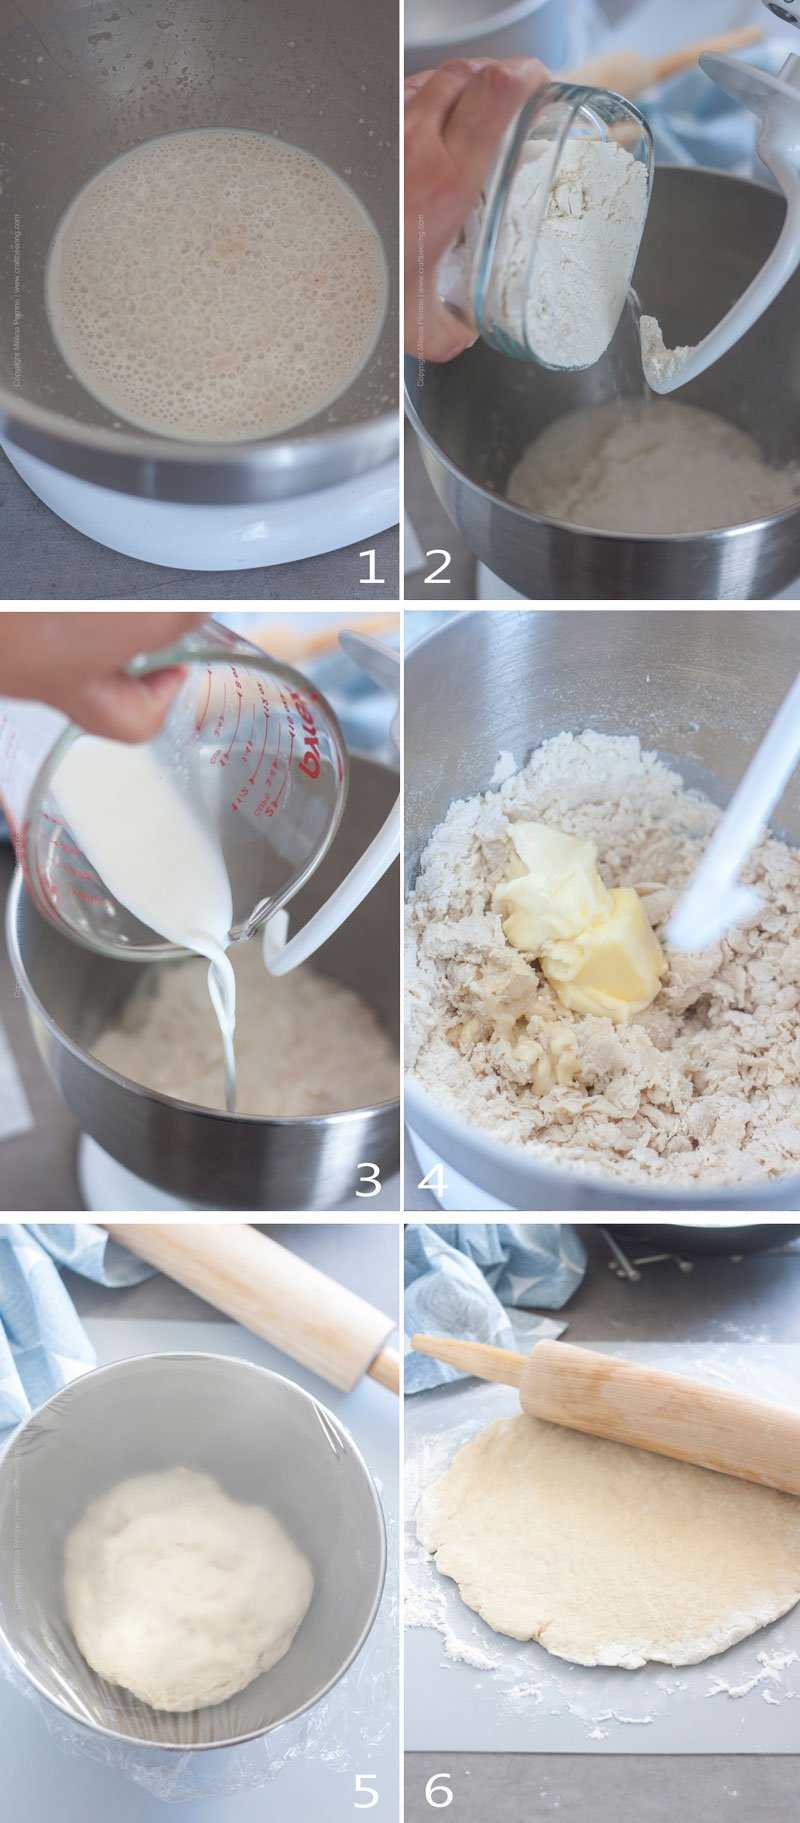 Steps to make the dough for Zwiebelkuchen crust